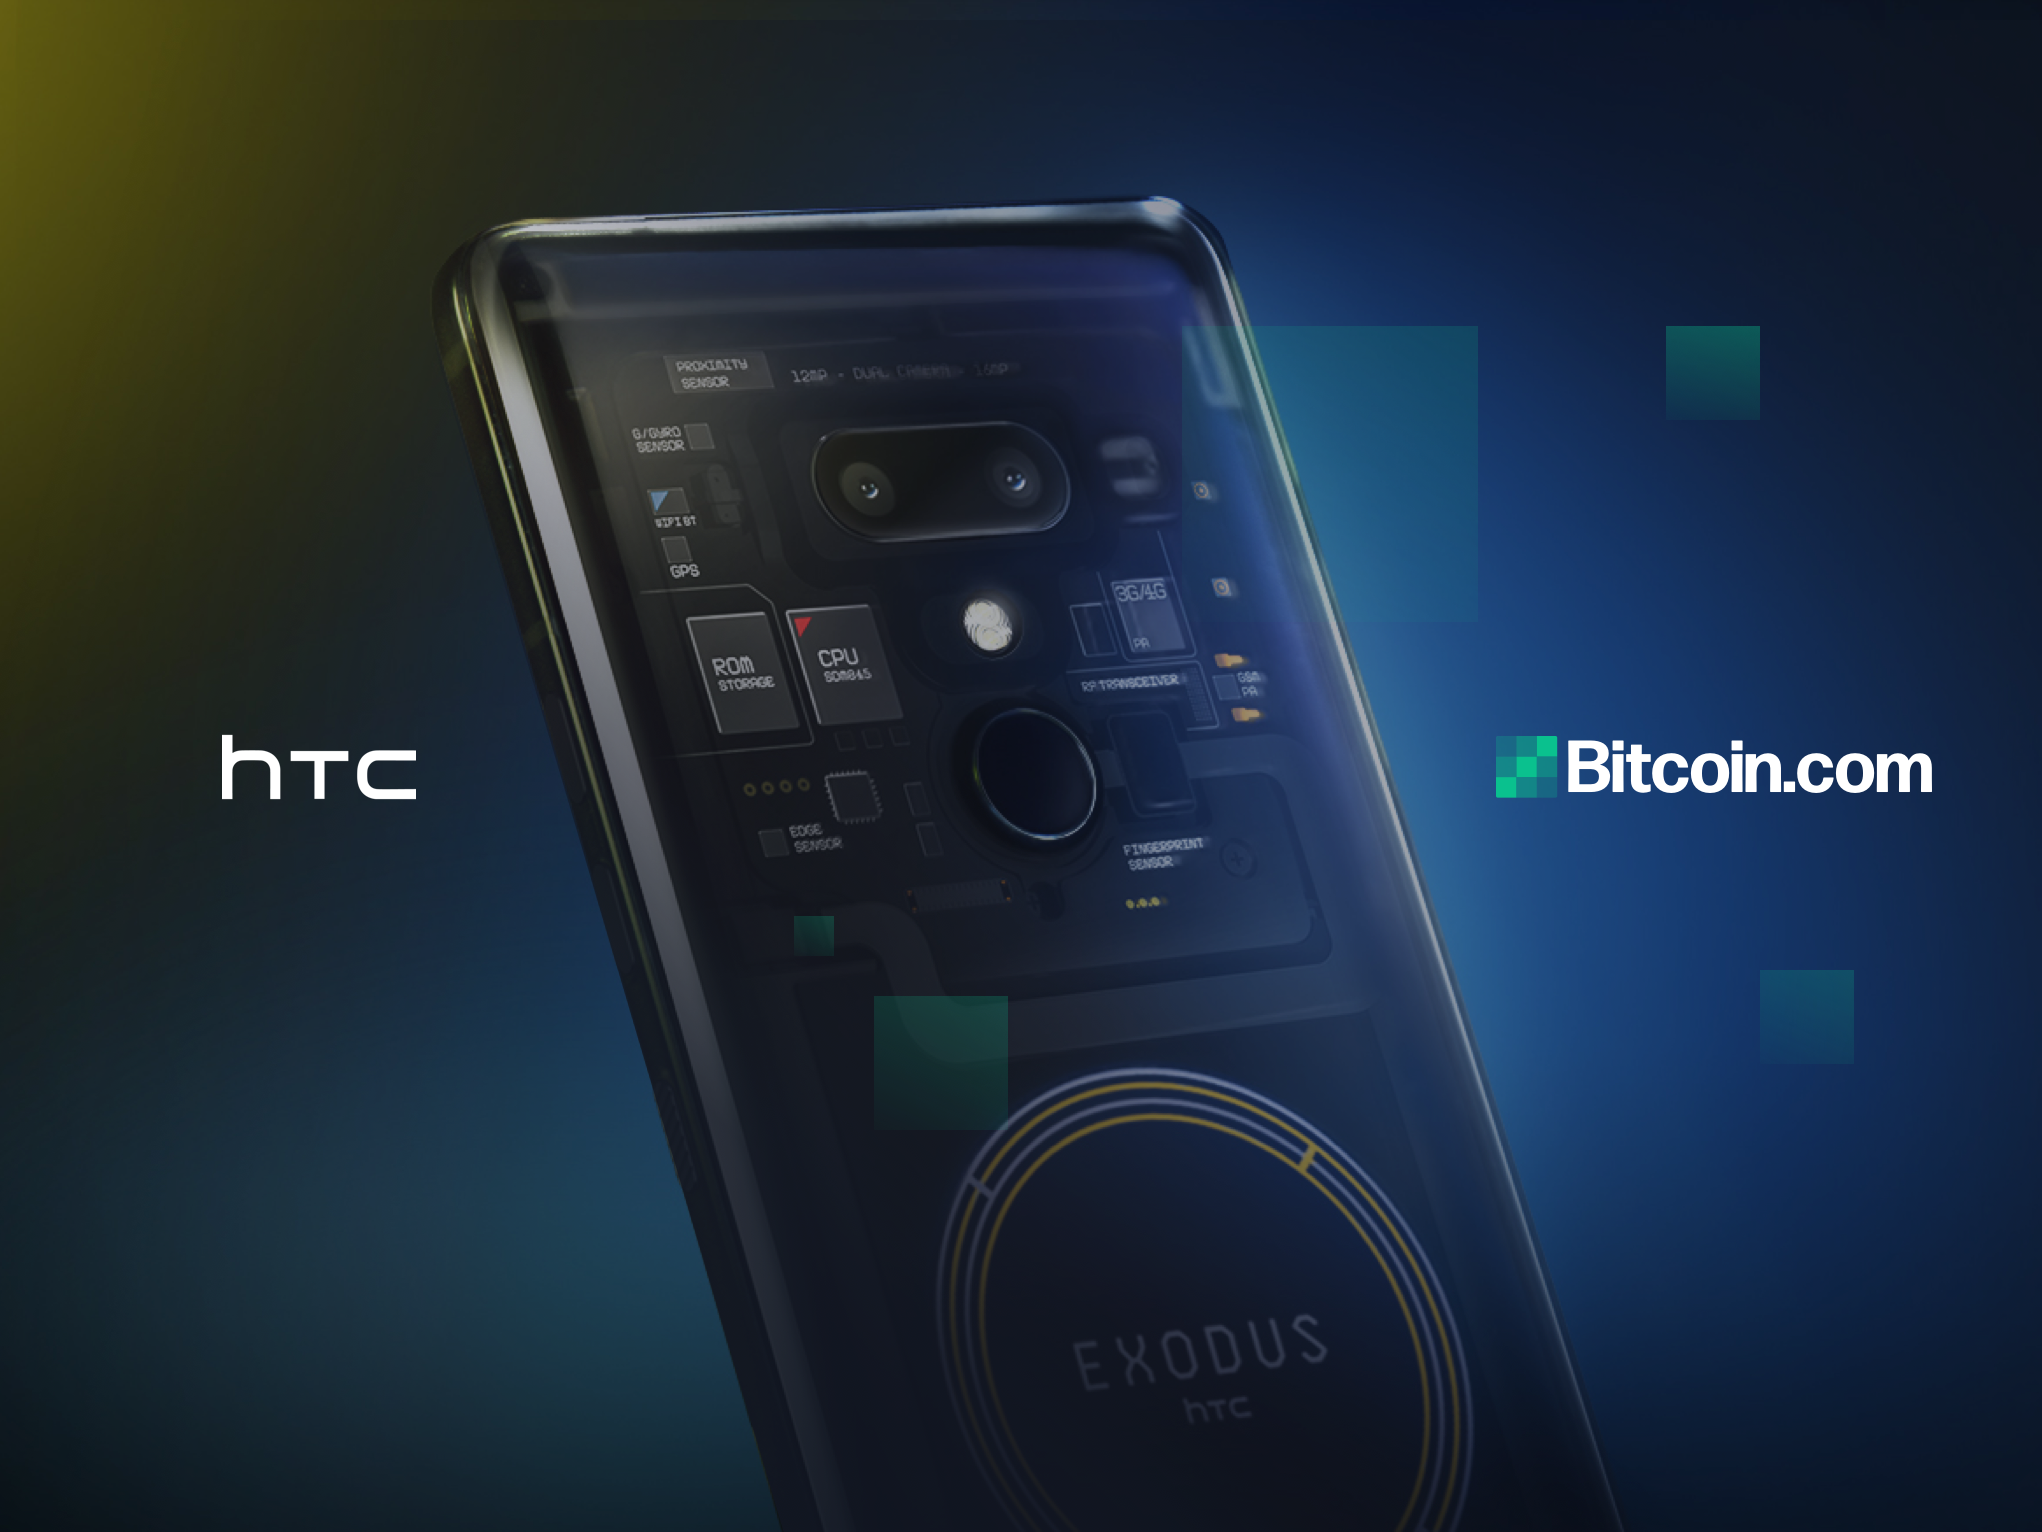 PR: Bitcoin.com Announces Partnership With Telecommunications Manufacturer HTC